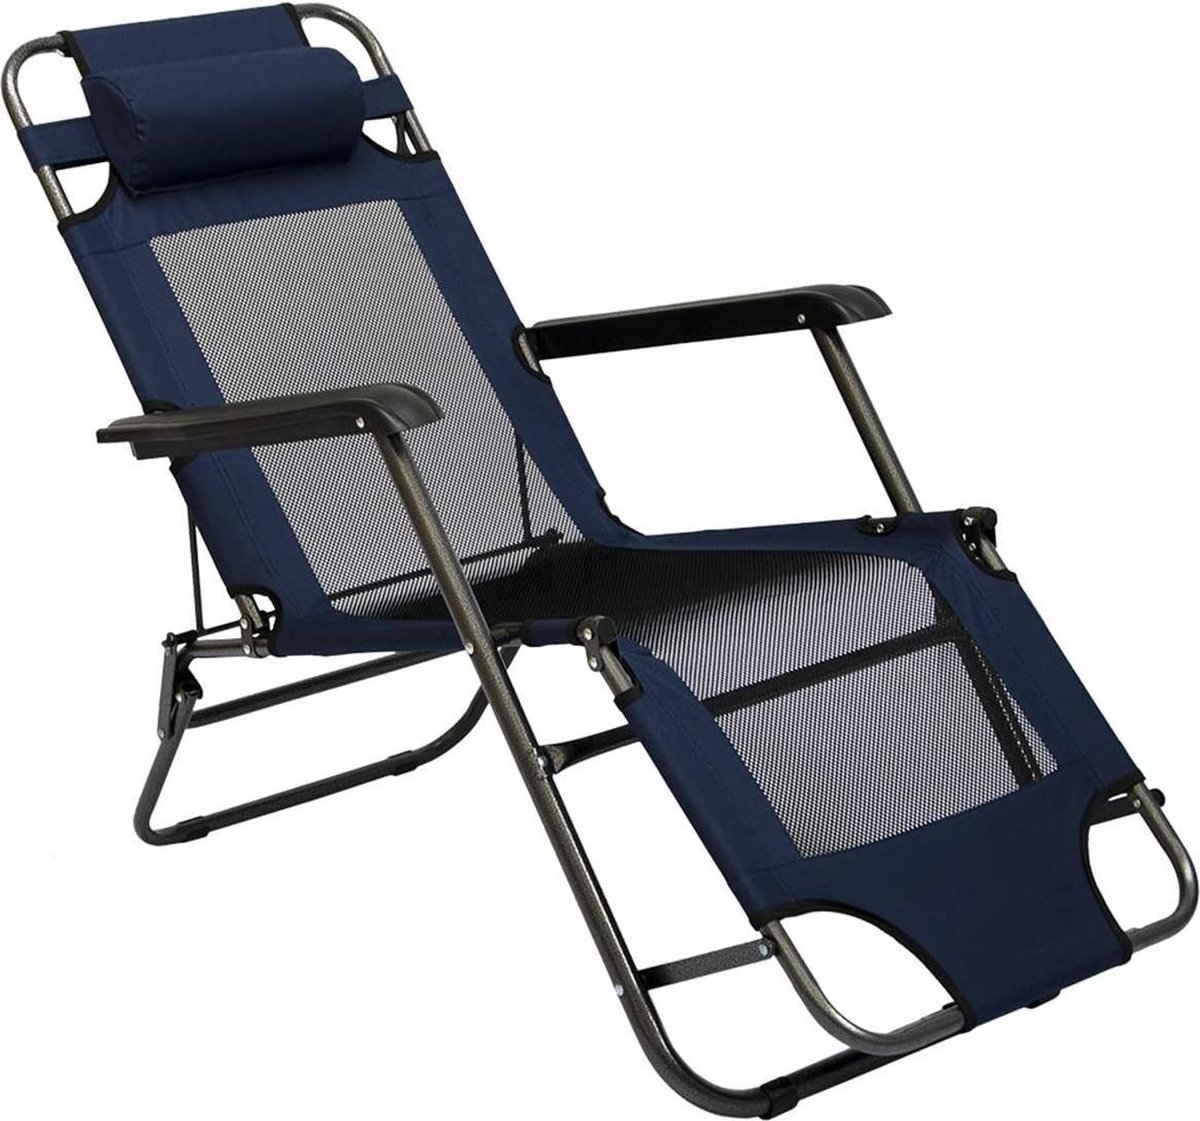 Ligstoel 155x60cm - opvouwbaar Campingstoel Ligbed Strandstoel Tuinstoel vouwligstoel Blauw